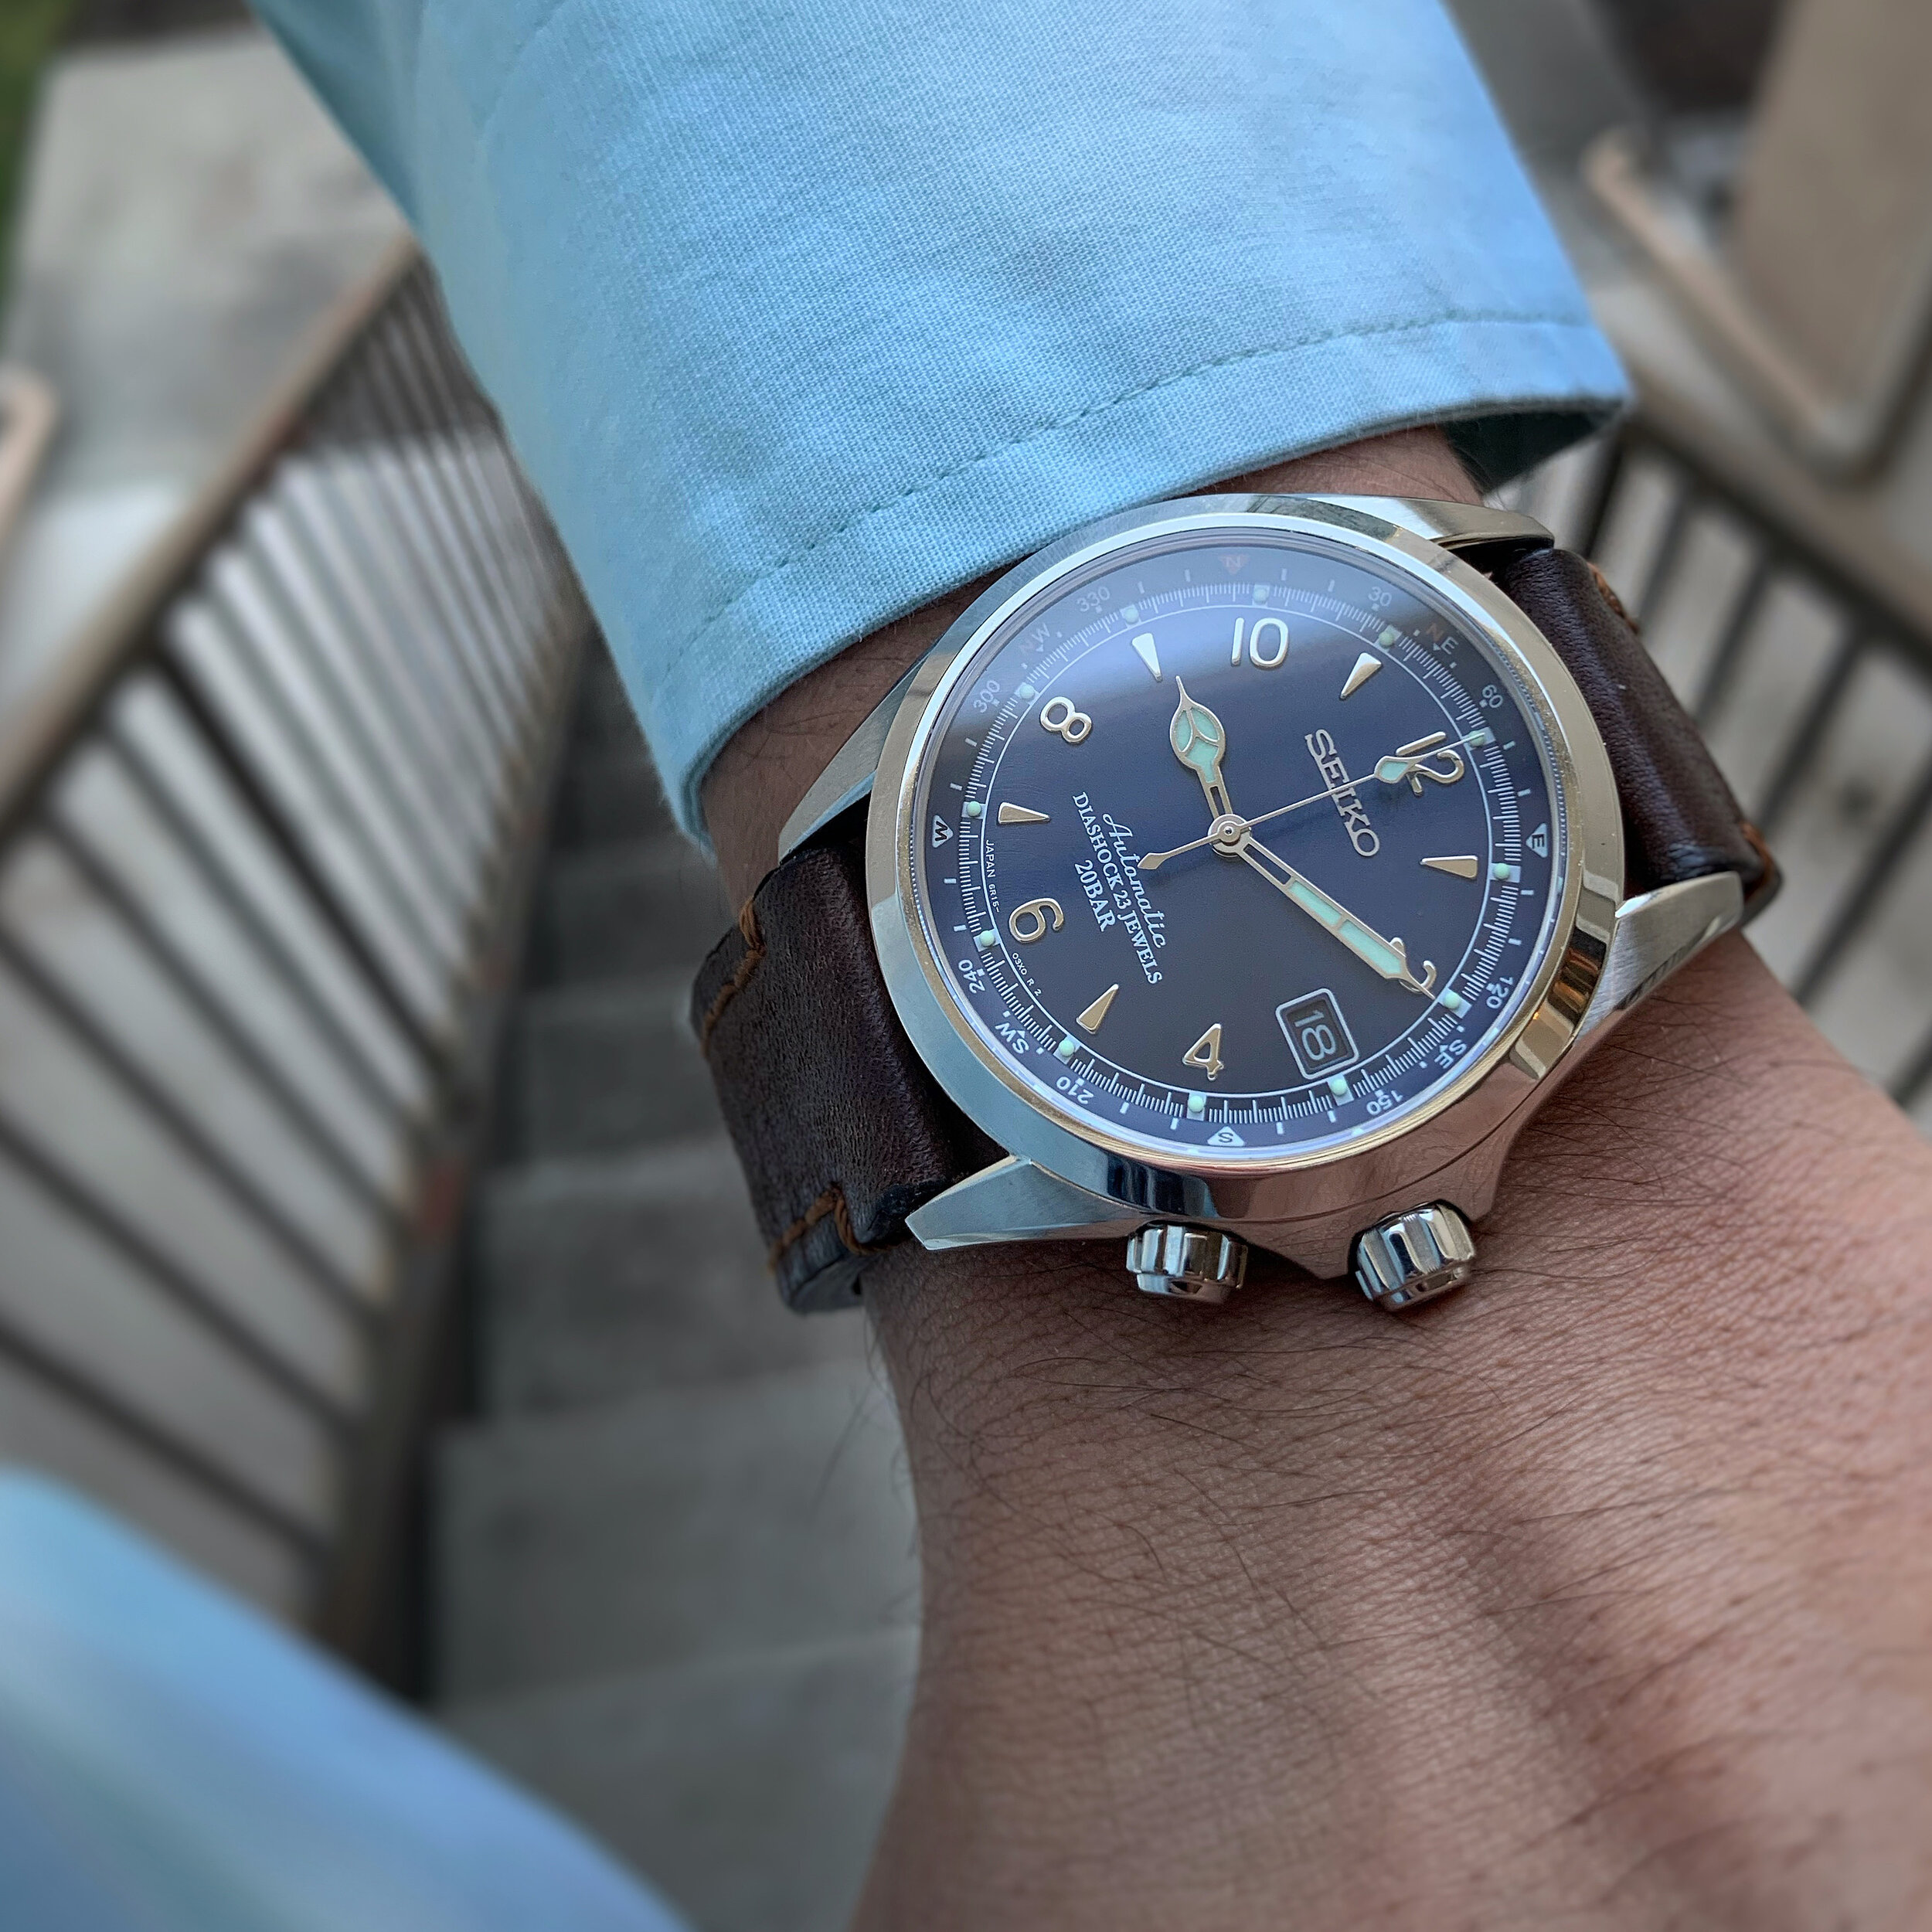 Seiko SPB089 (Blue Alpinist) — Affordable Wrist Time